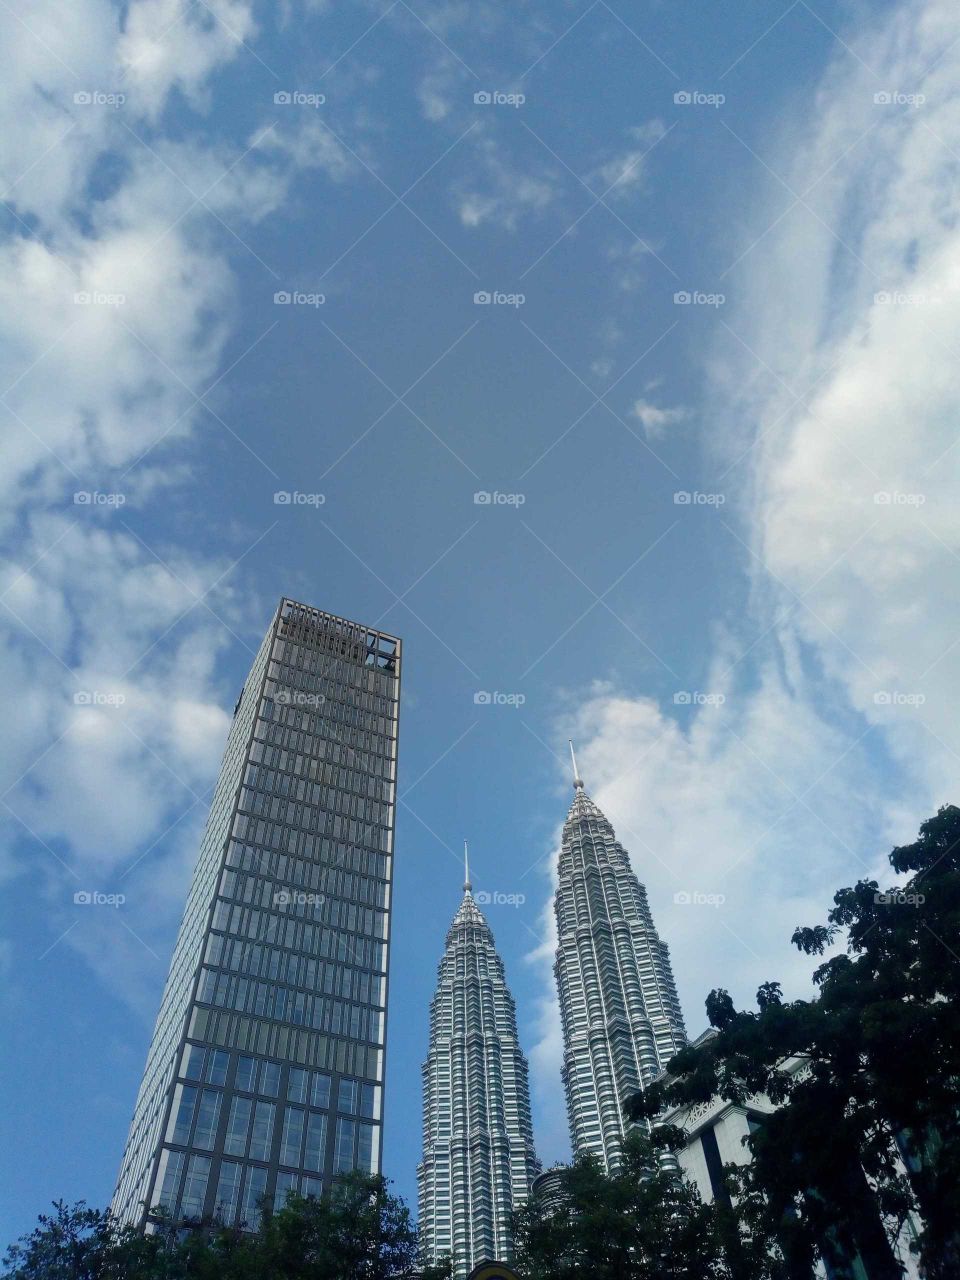 Patronas Towers in Kuala Lumpur